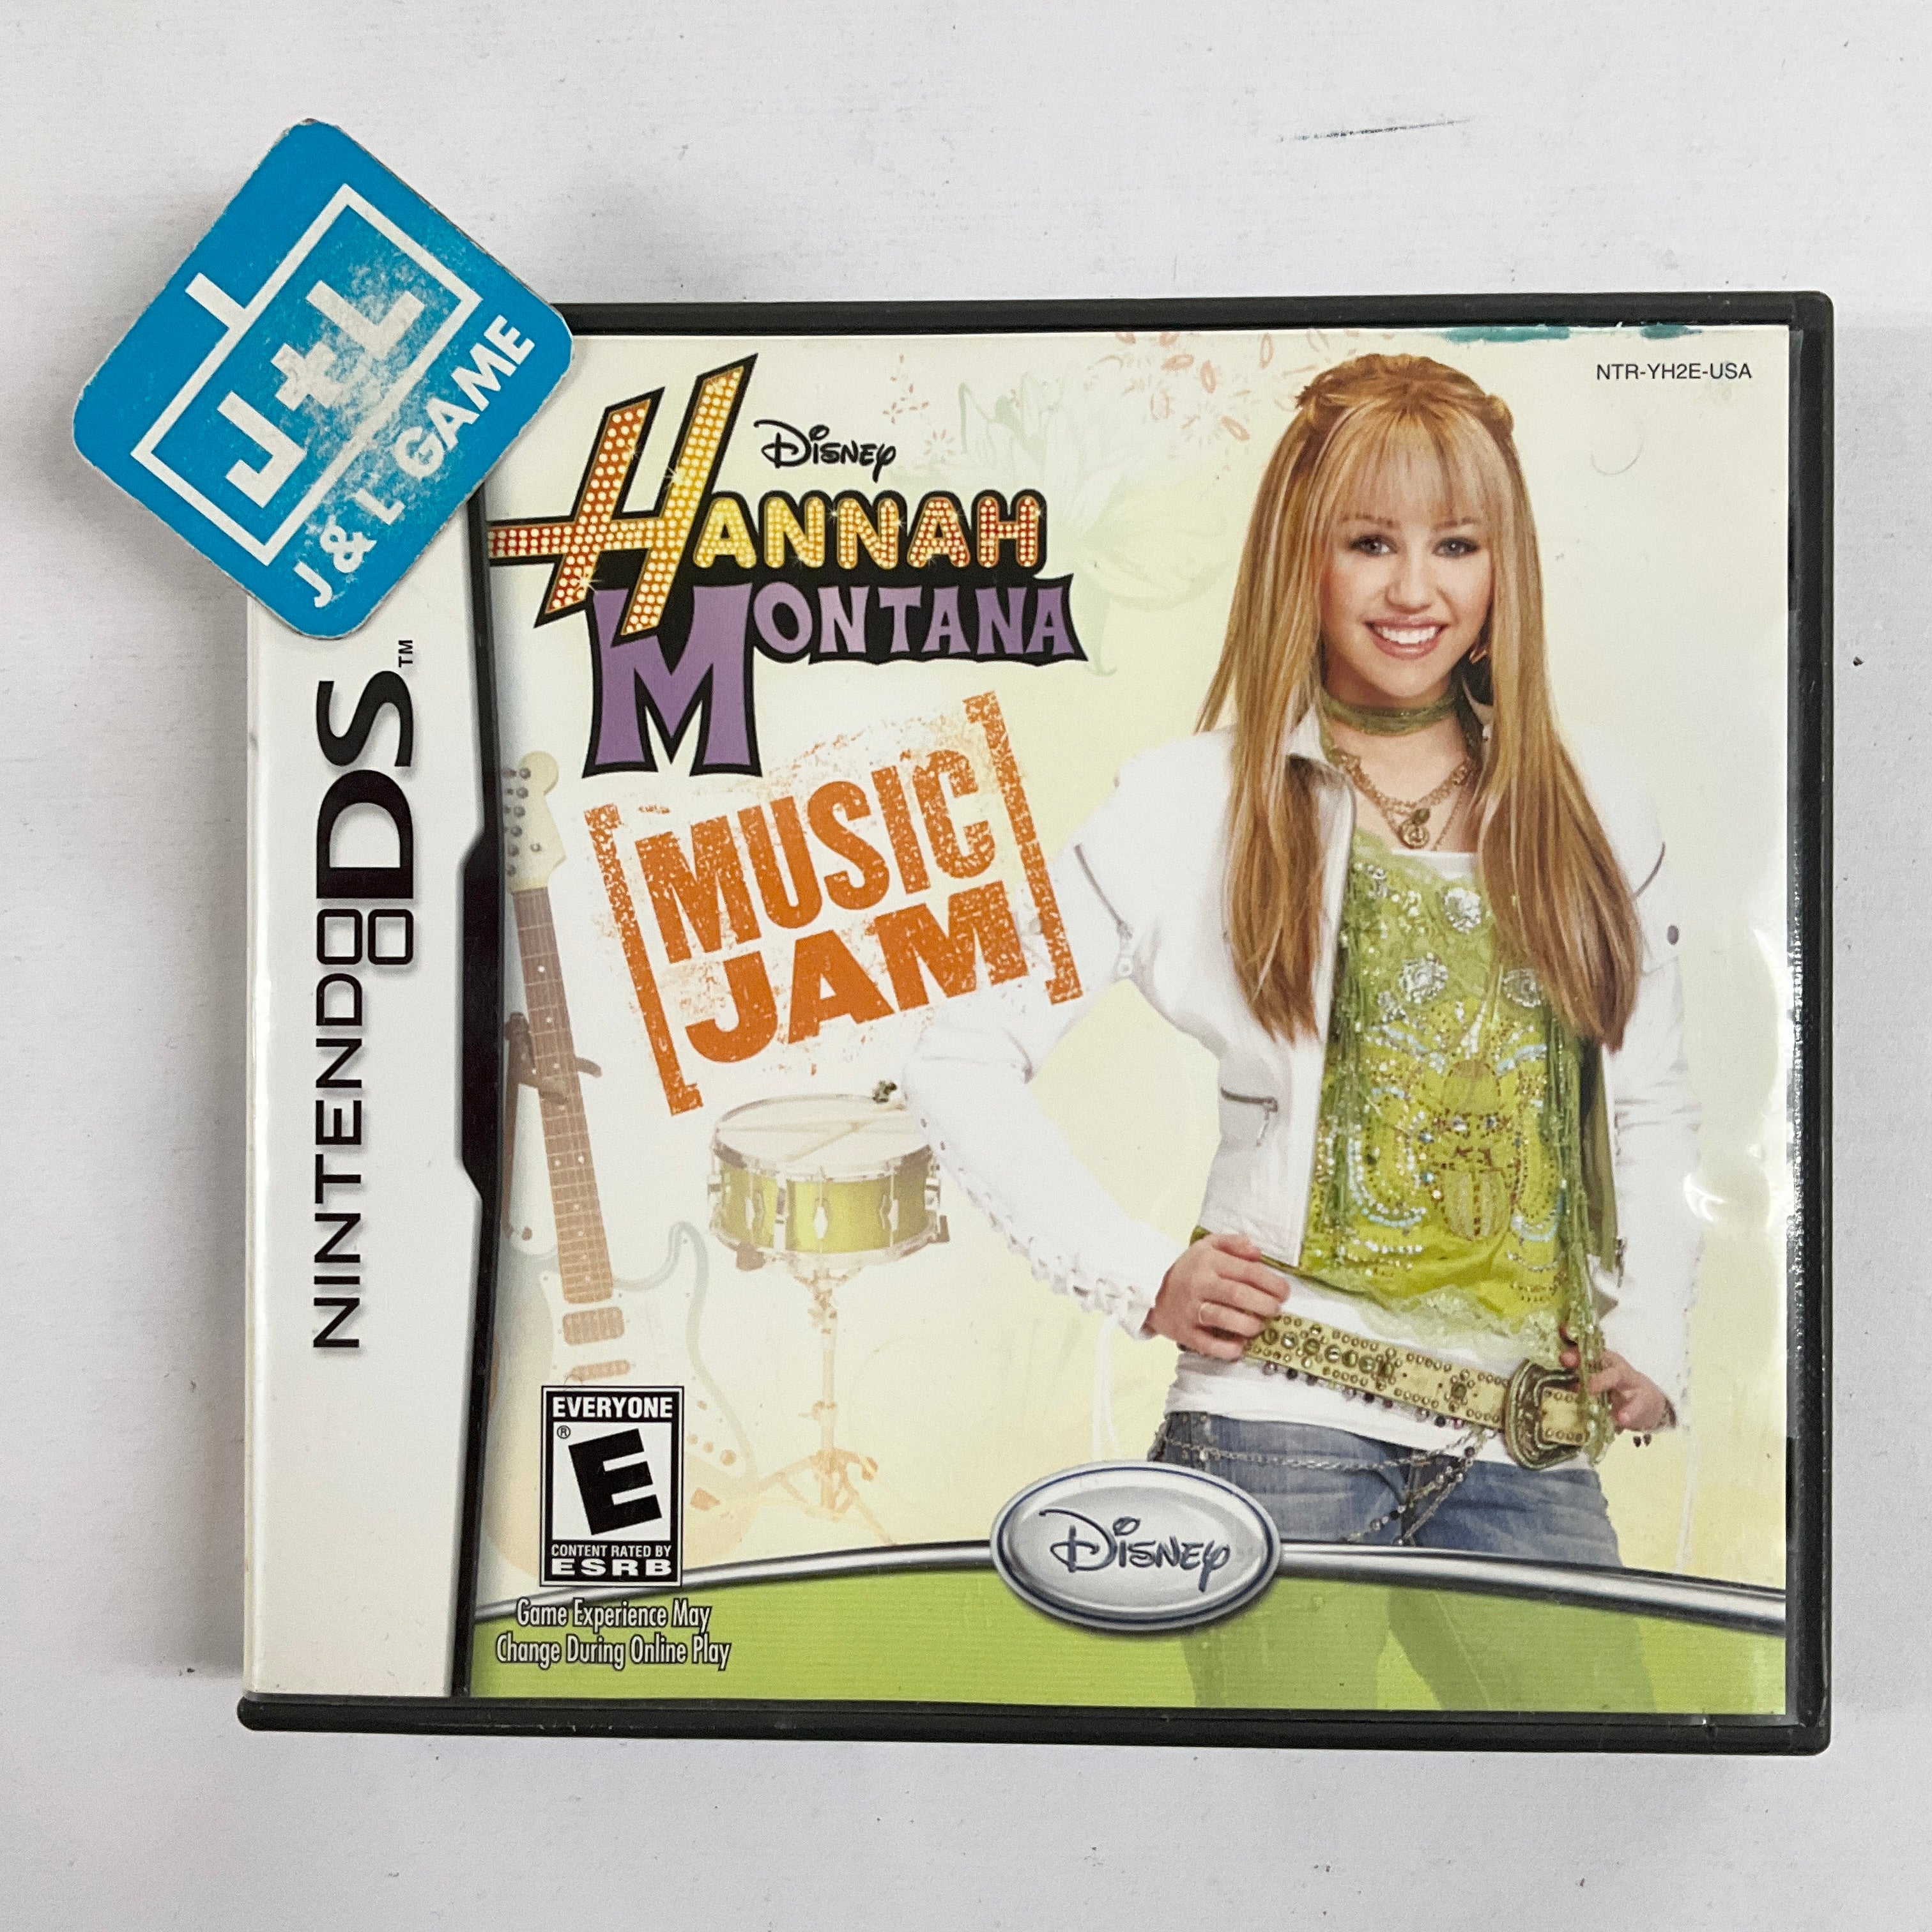 Disney Hannah Montana: Music Jam - (NDS) Nintendo DS [Pre-Owned] Video Games Disney Interactive Studios   